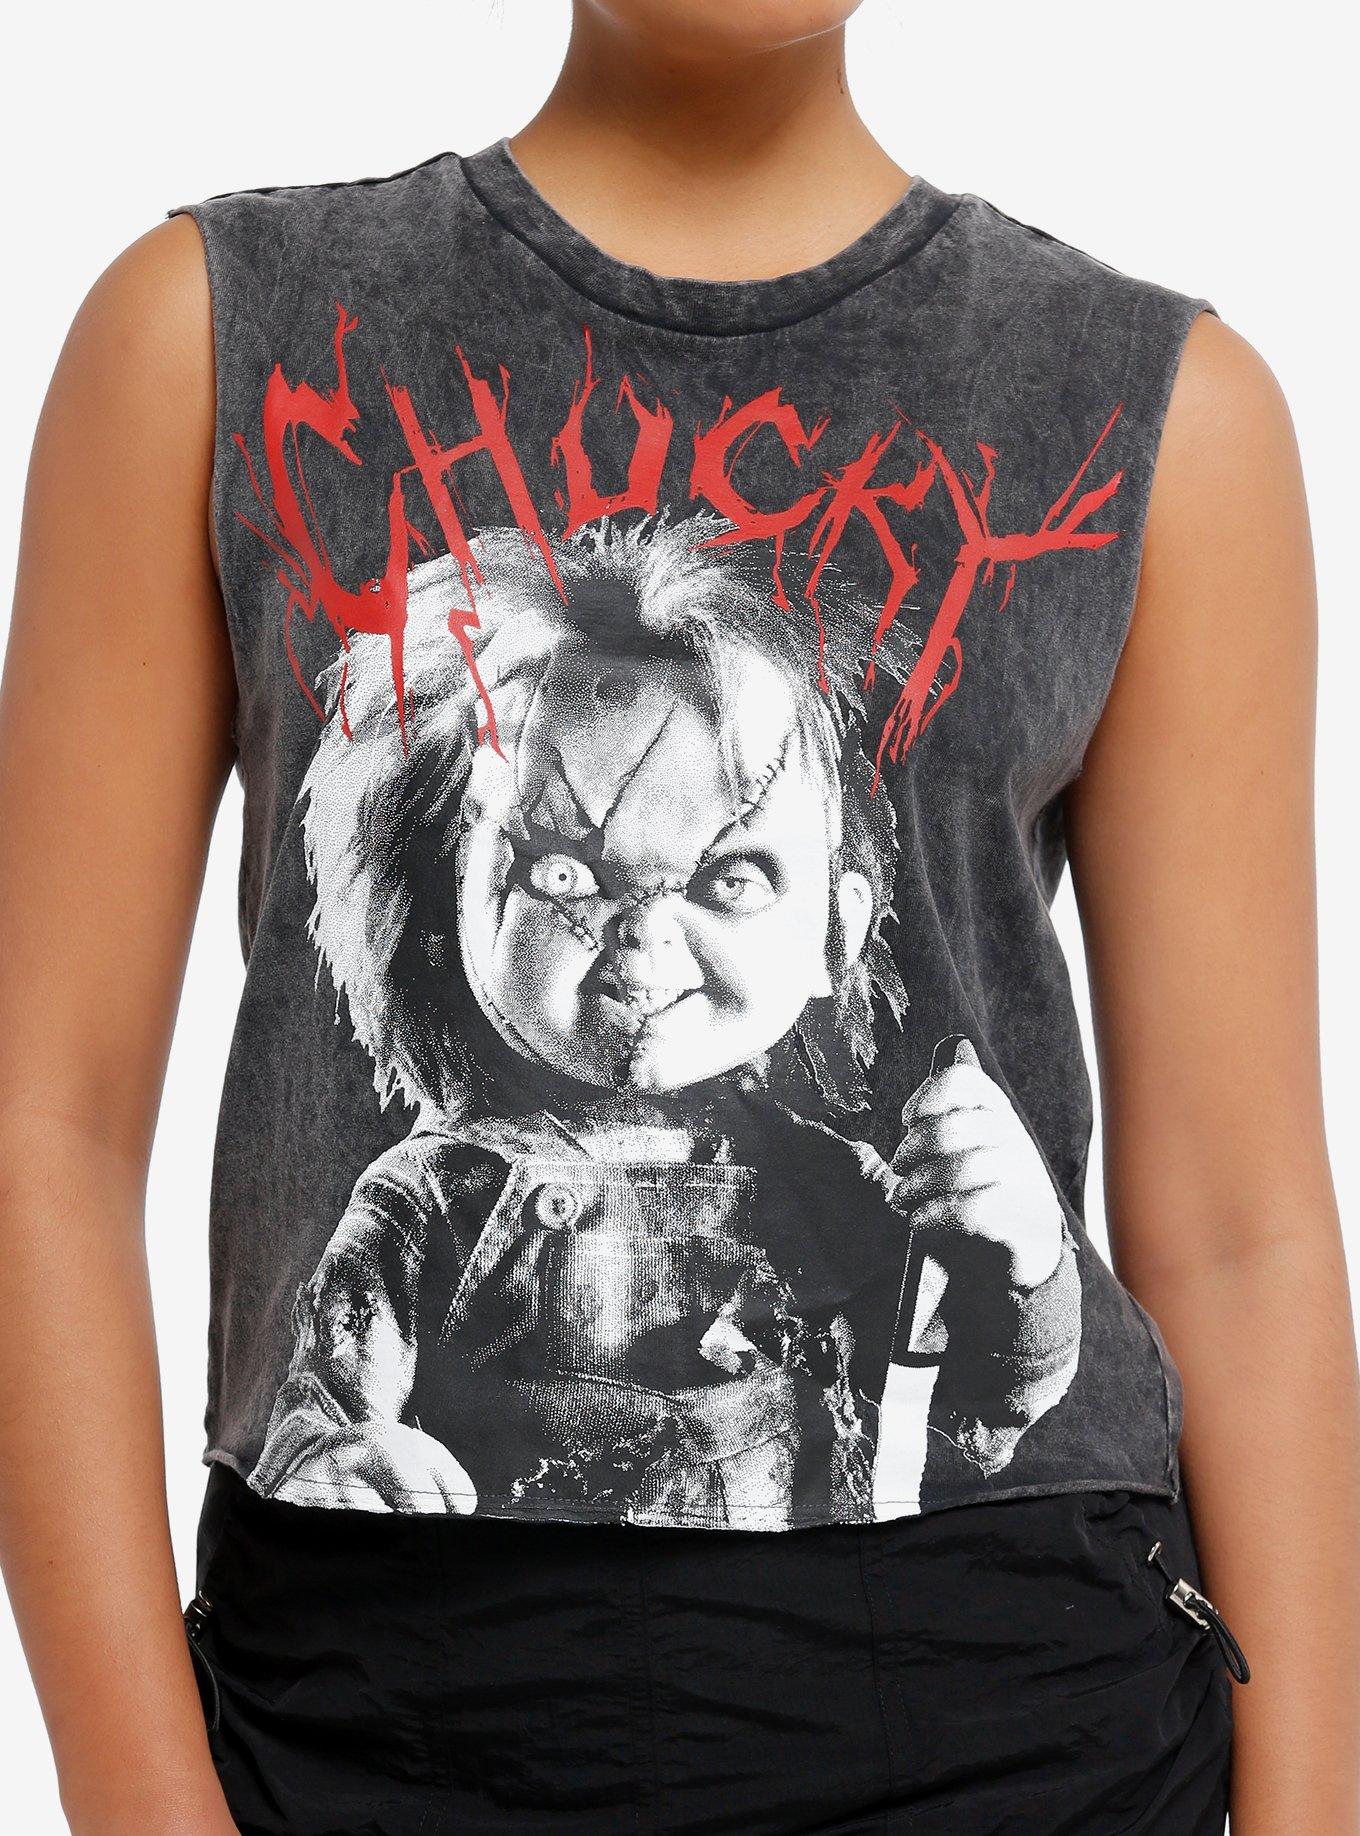 Chucky Jumbo Graphic Girls Muscle Tank Top